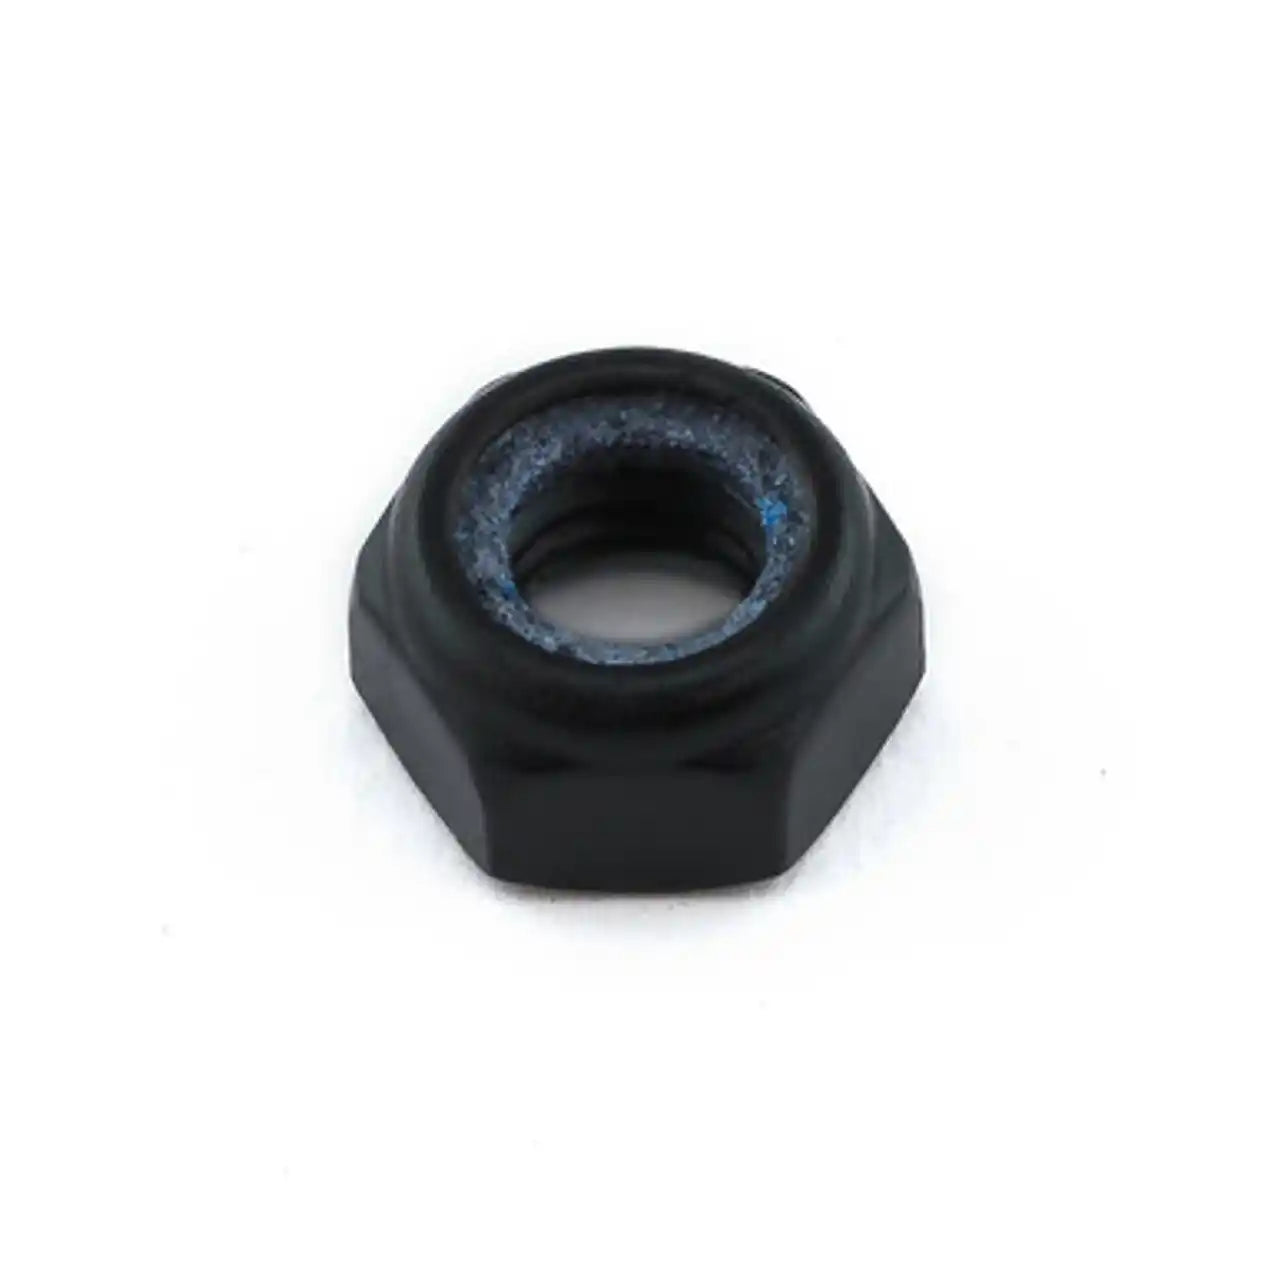 8-32 Aluminum Black Hex Thin Nylon Lock Nut (10pk)